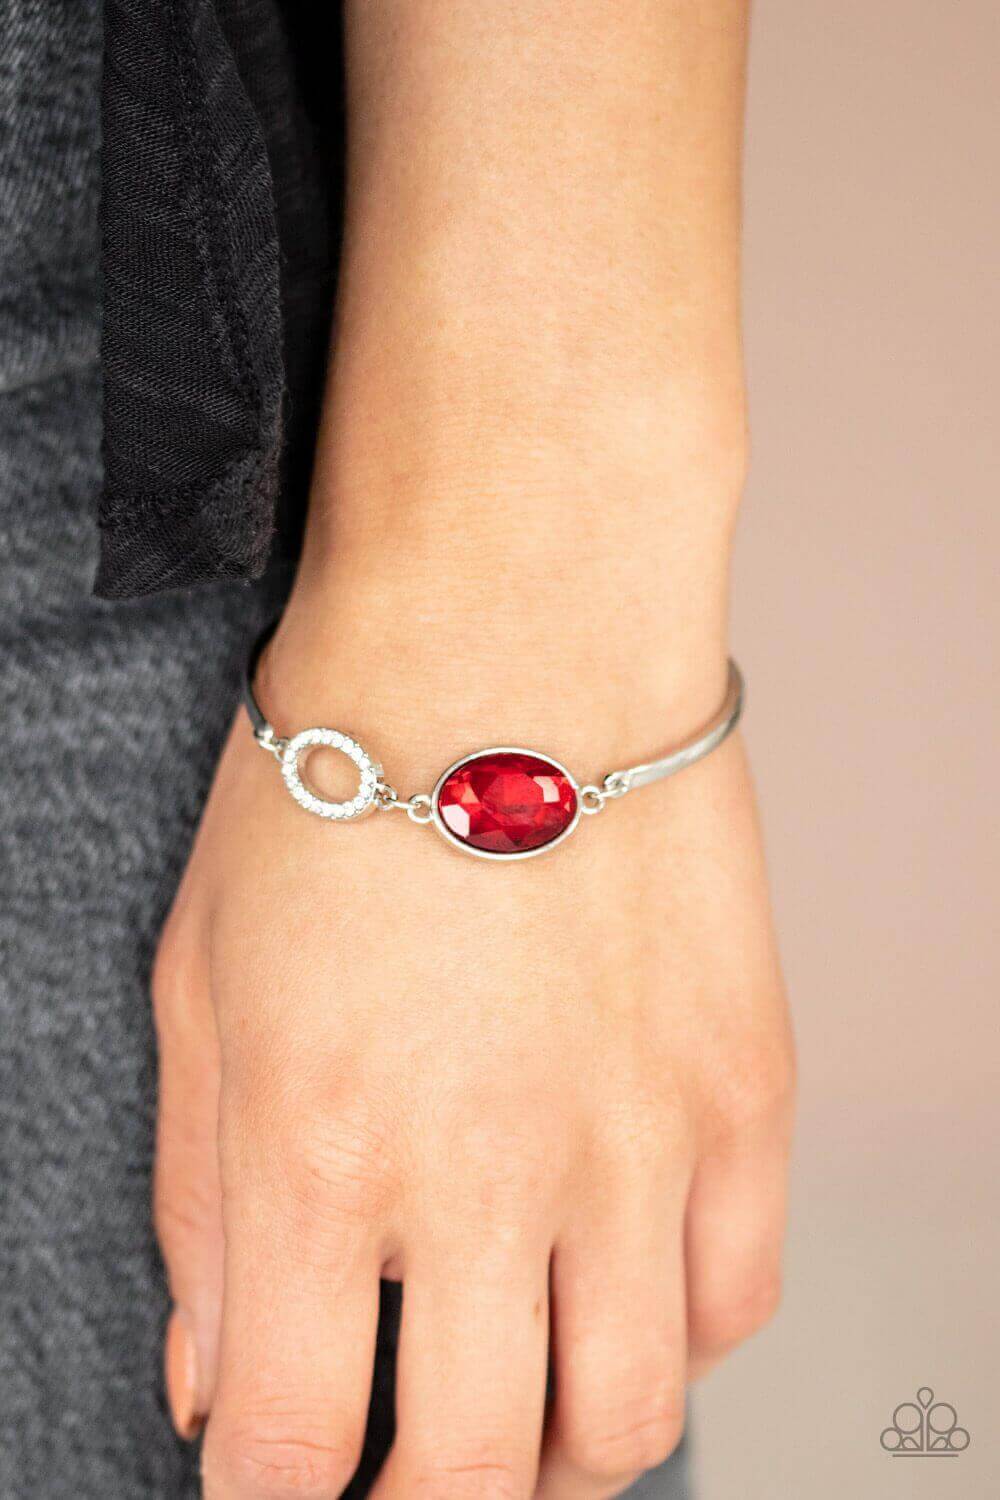 Unstoppable Glamour - Red Necklace & Bracelet Combo - Princess Glam Shop